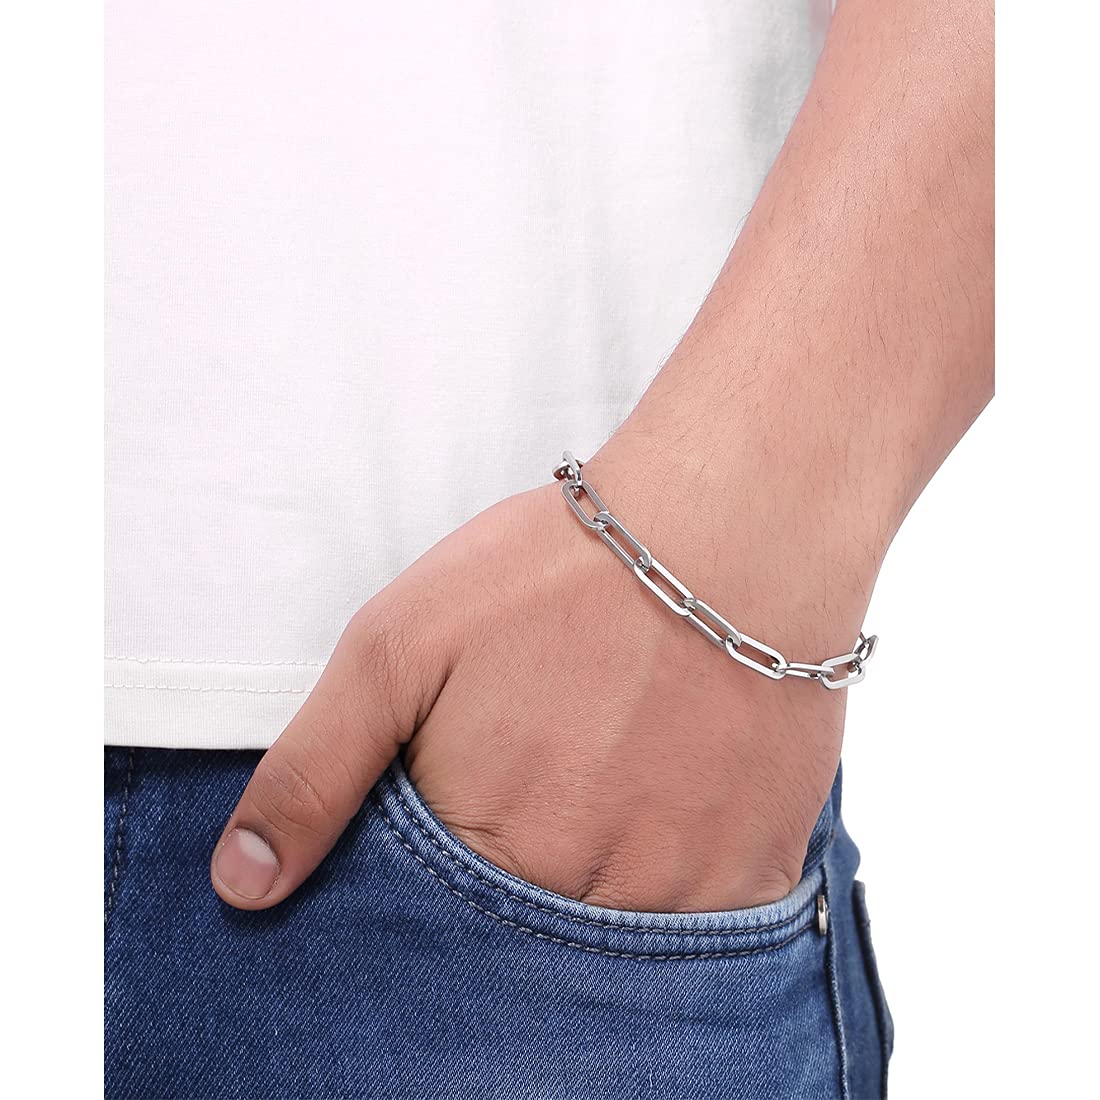 Buy Silver Bracelets  Bangles for Boys by Eloish Online  Ajiocom